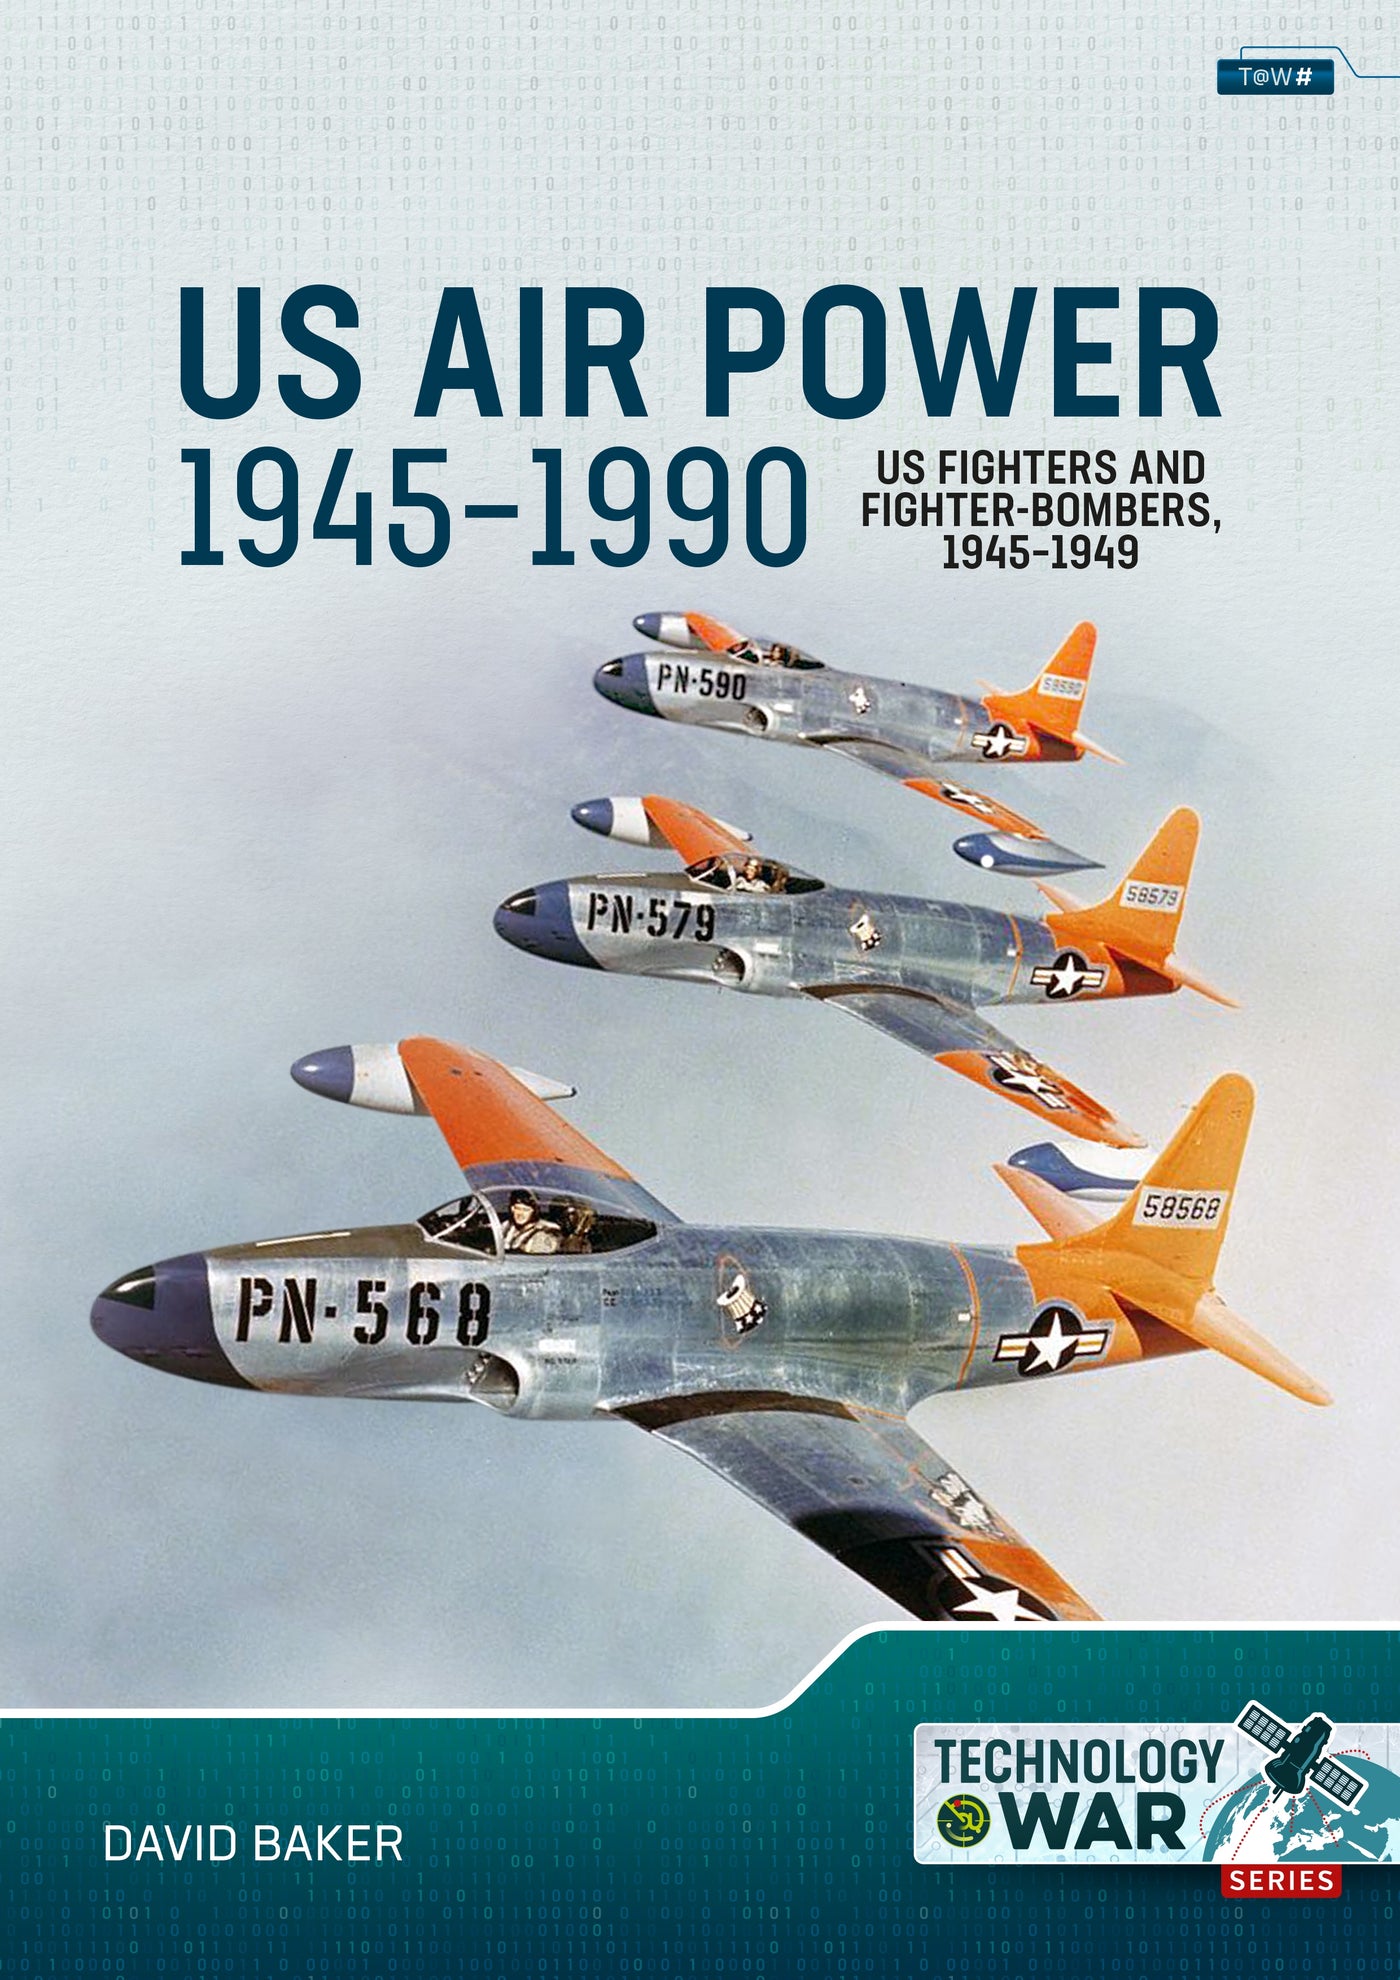 US Air Power, 1945-1990 Volume 1